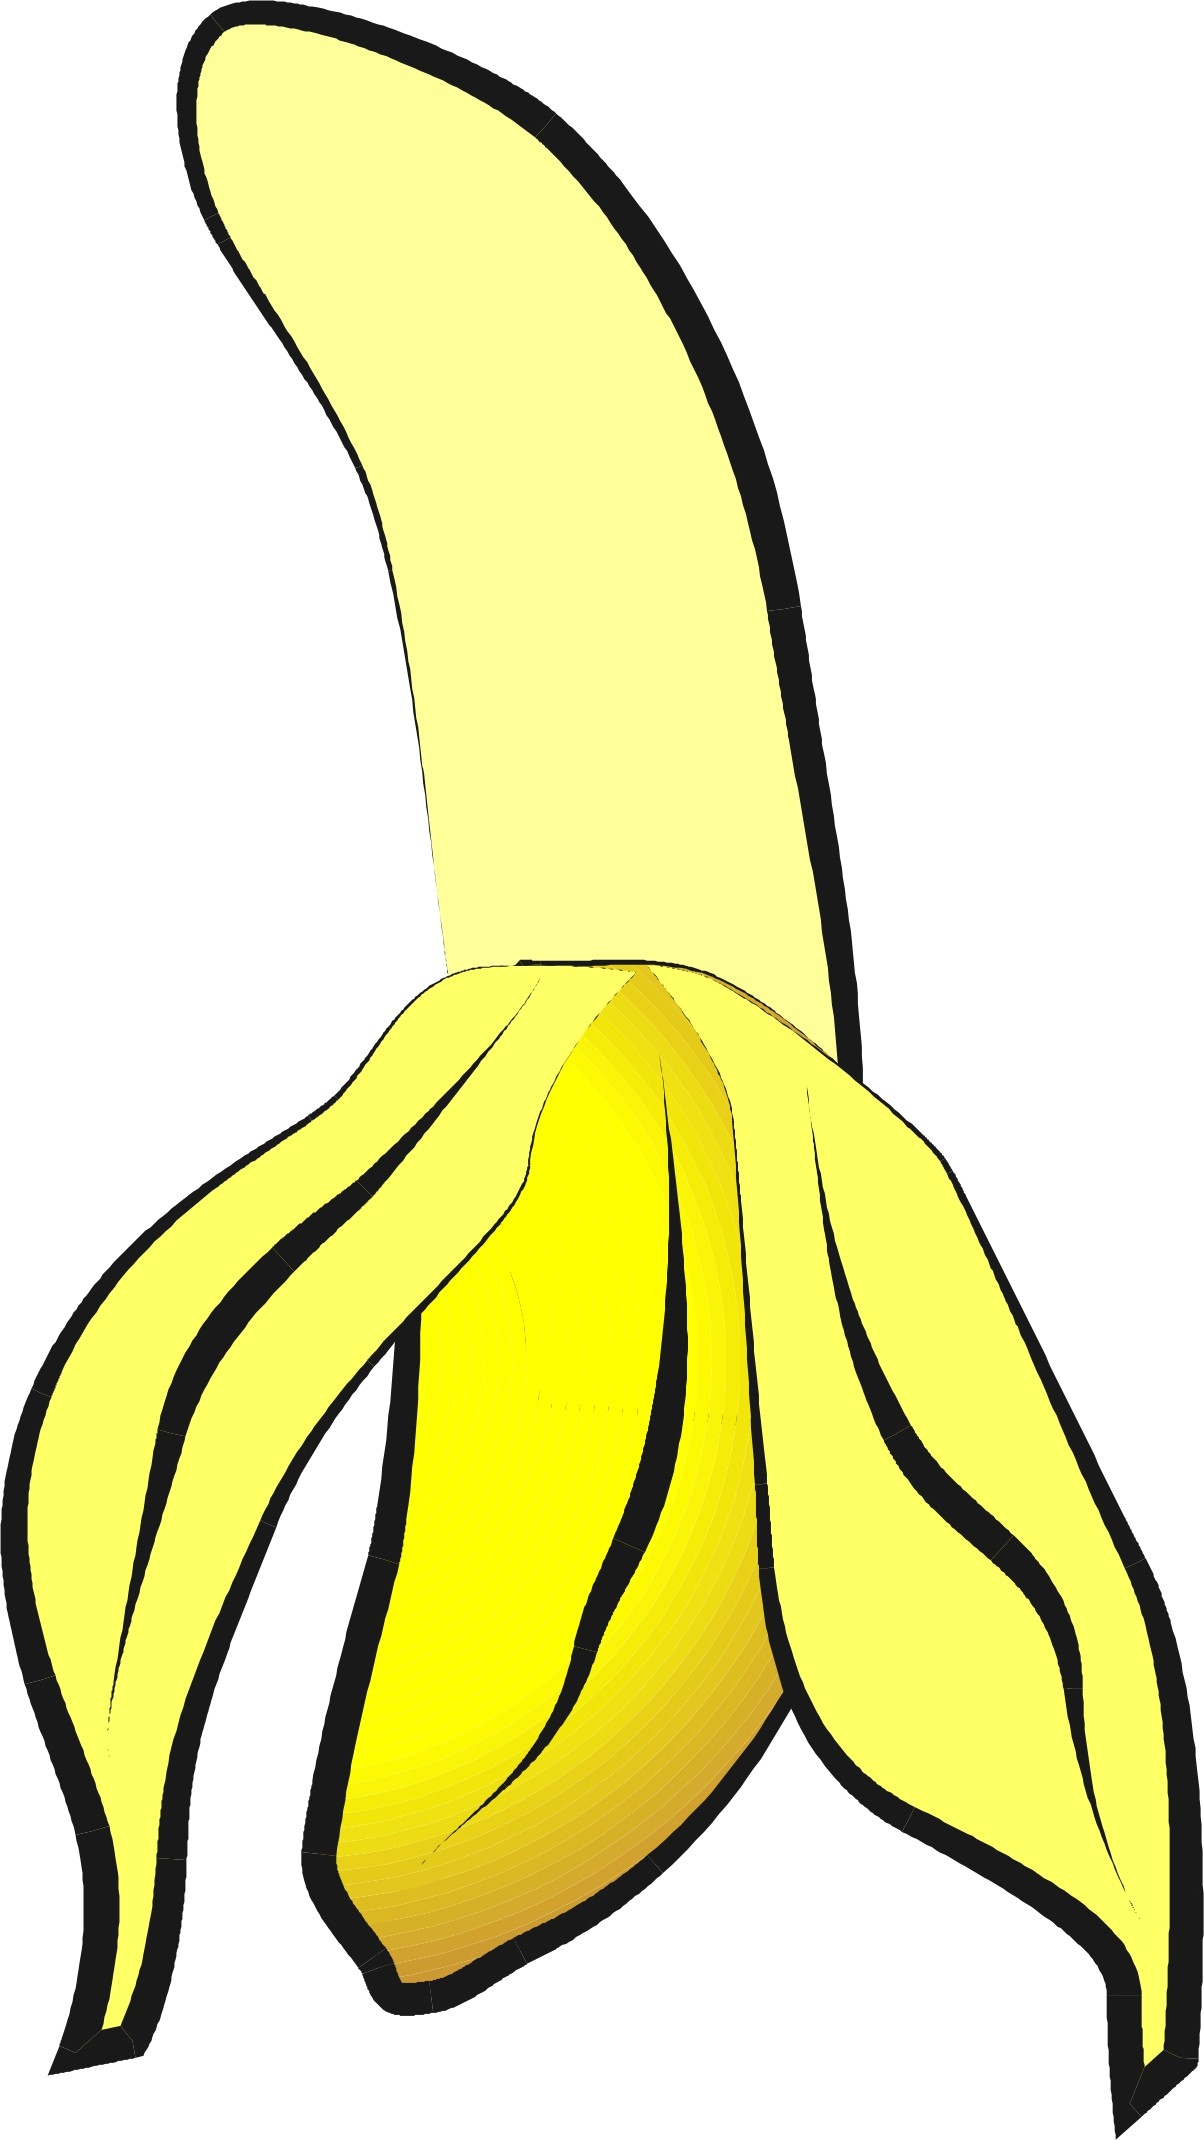 banana clipart reference